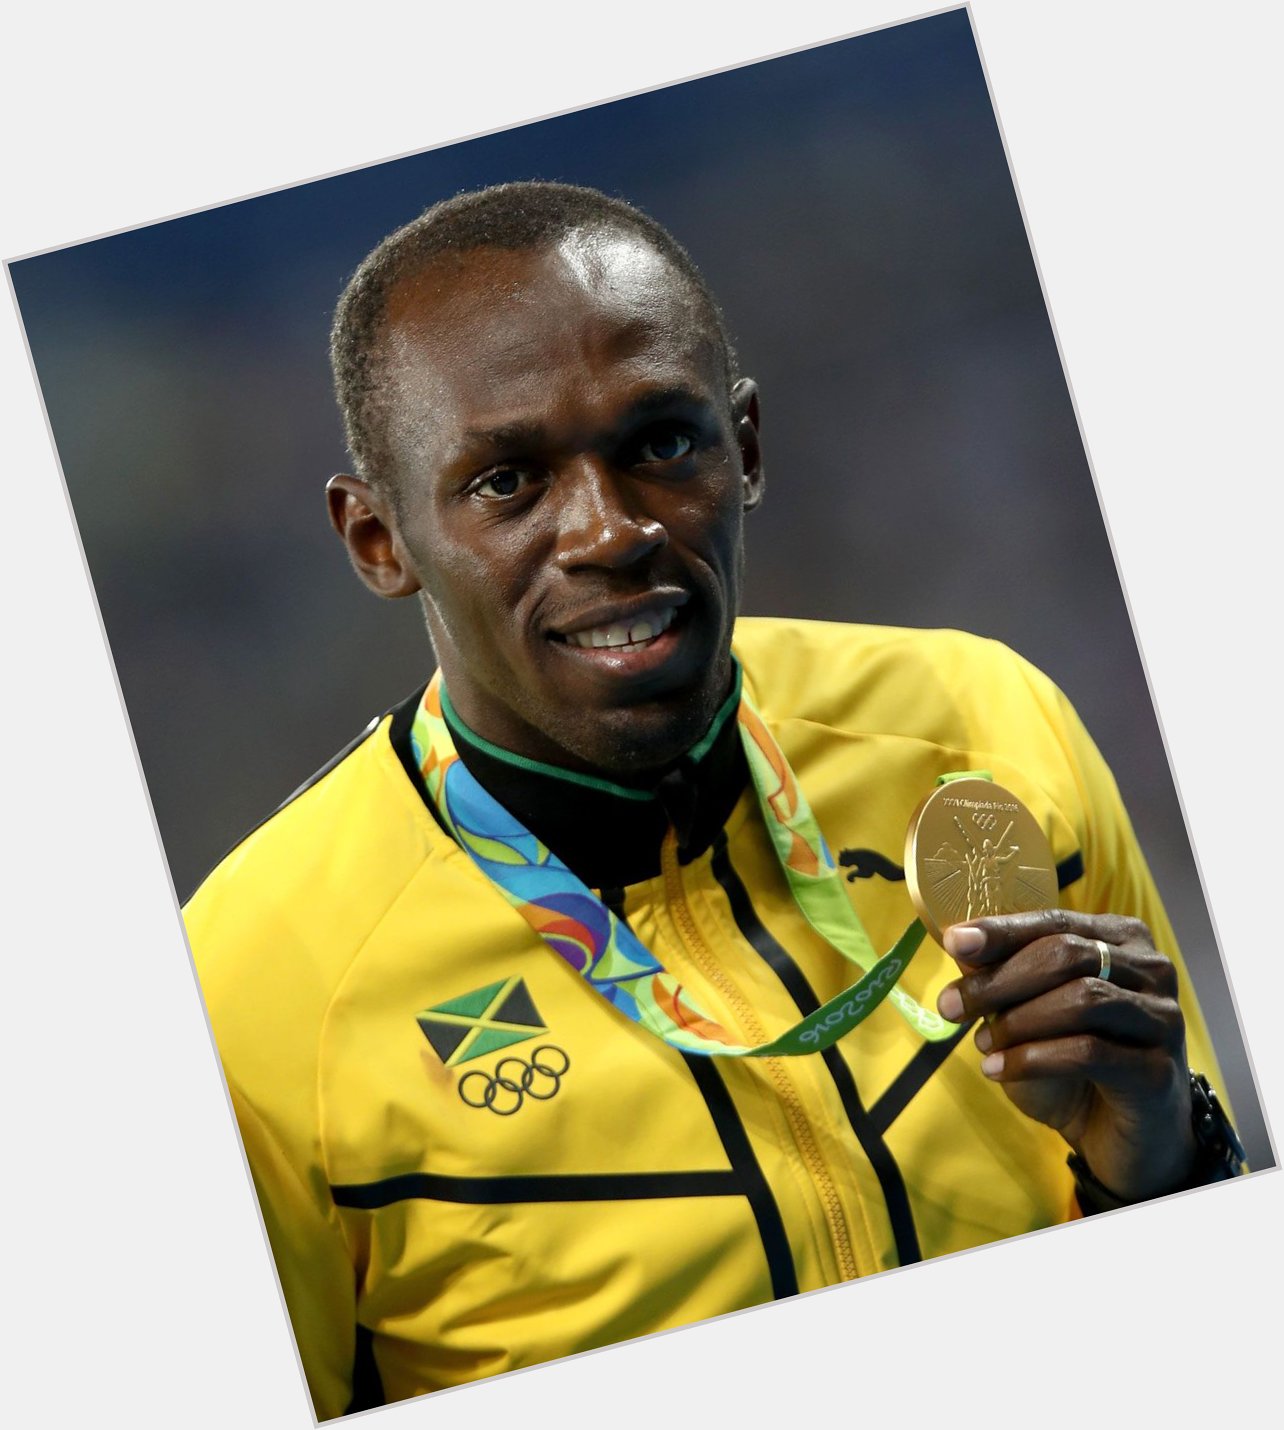 Happy 39th Birthday to Usain Bolt
Source 